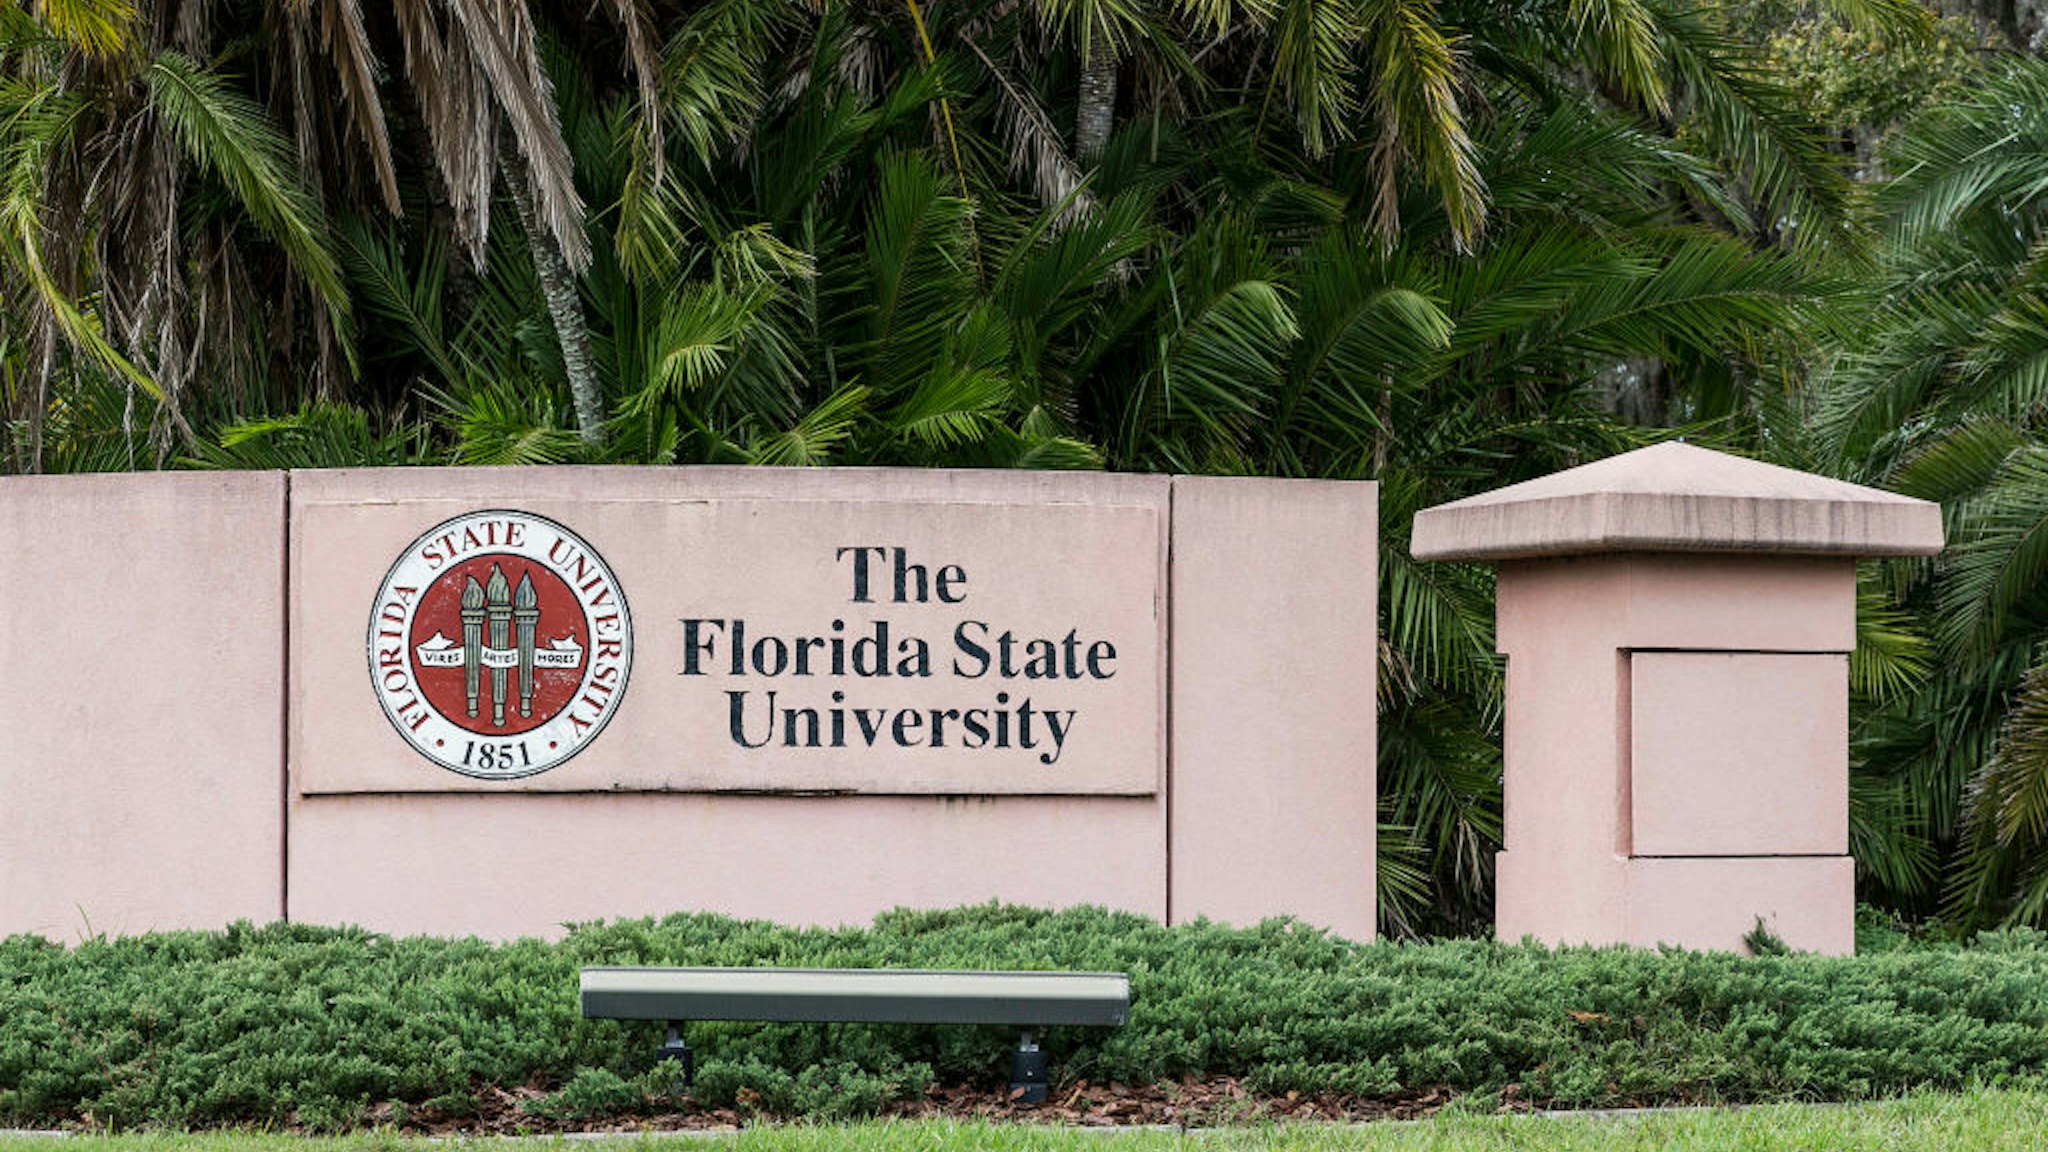 FLORIDA STATE UNIVERSITY, SARASOTA, FLORIDA, UNITED STATES - 2017/01/16: Florida State University. (Photo by John Greim/LightRocket via Getty Images)